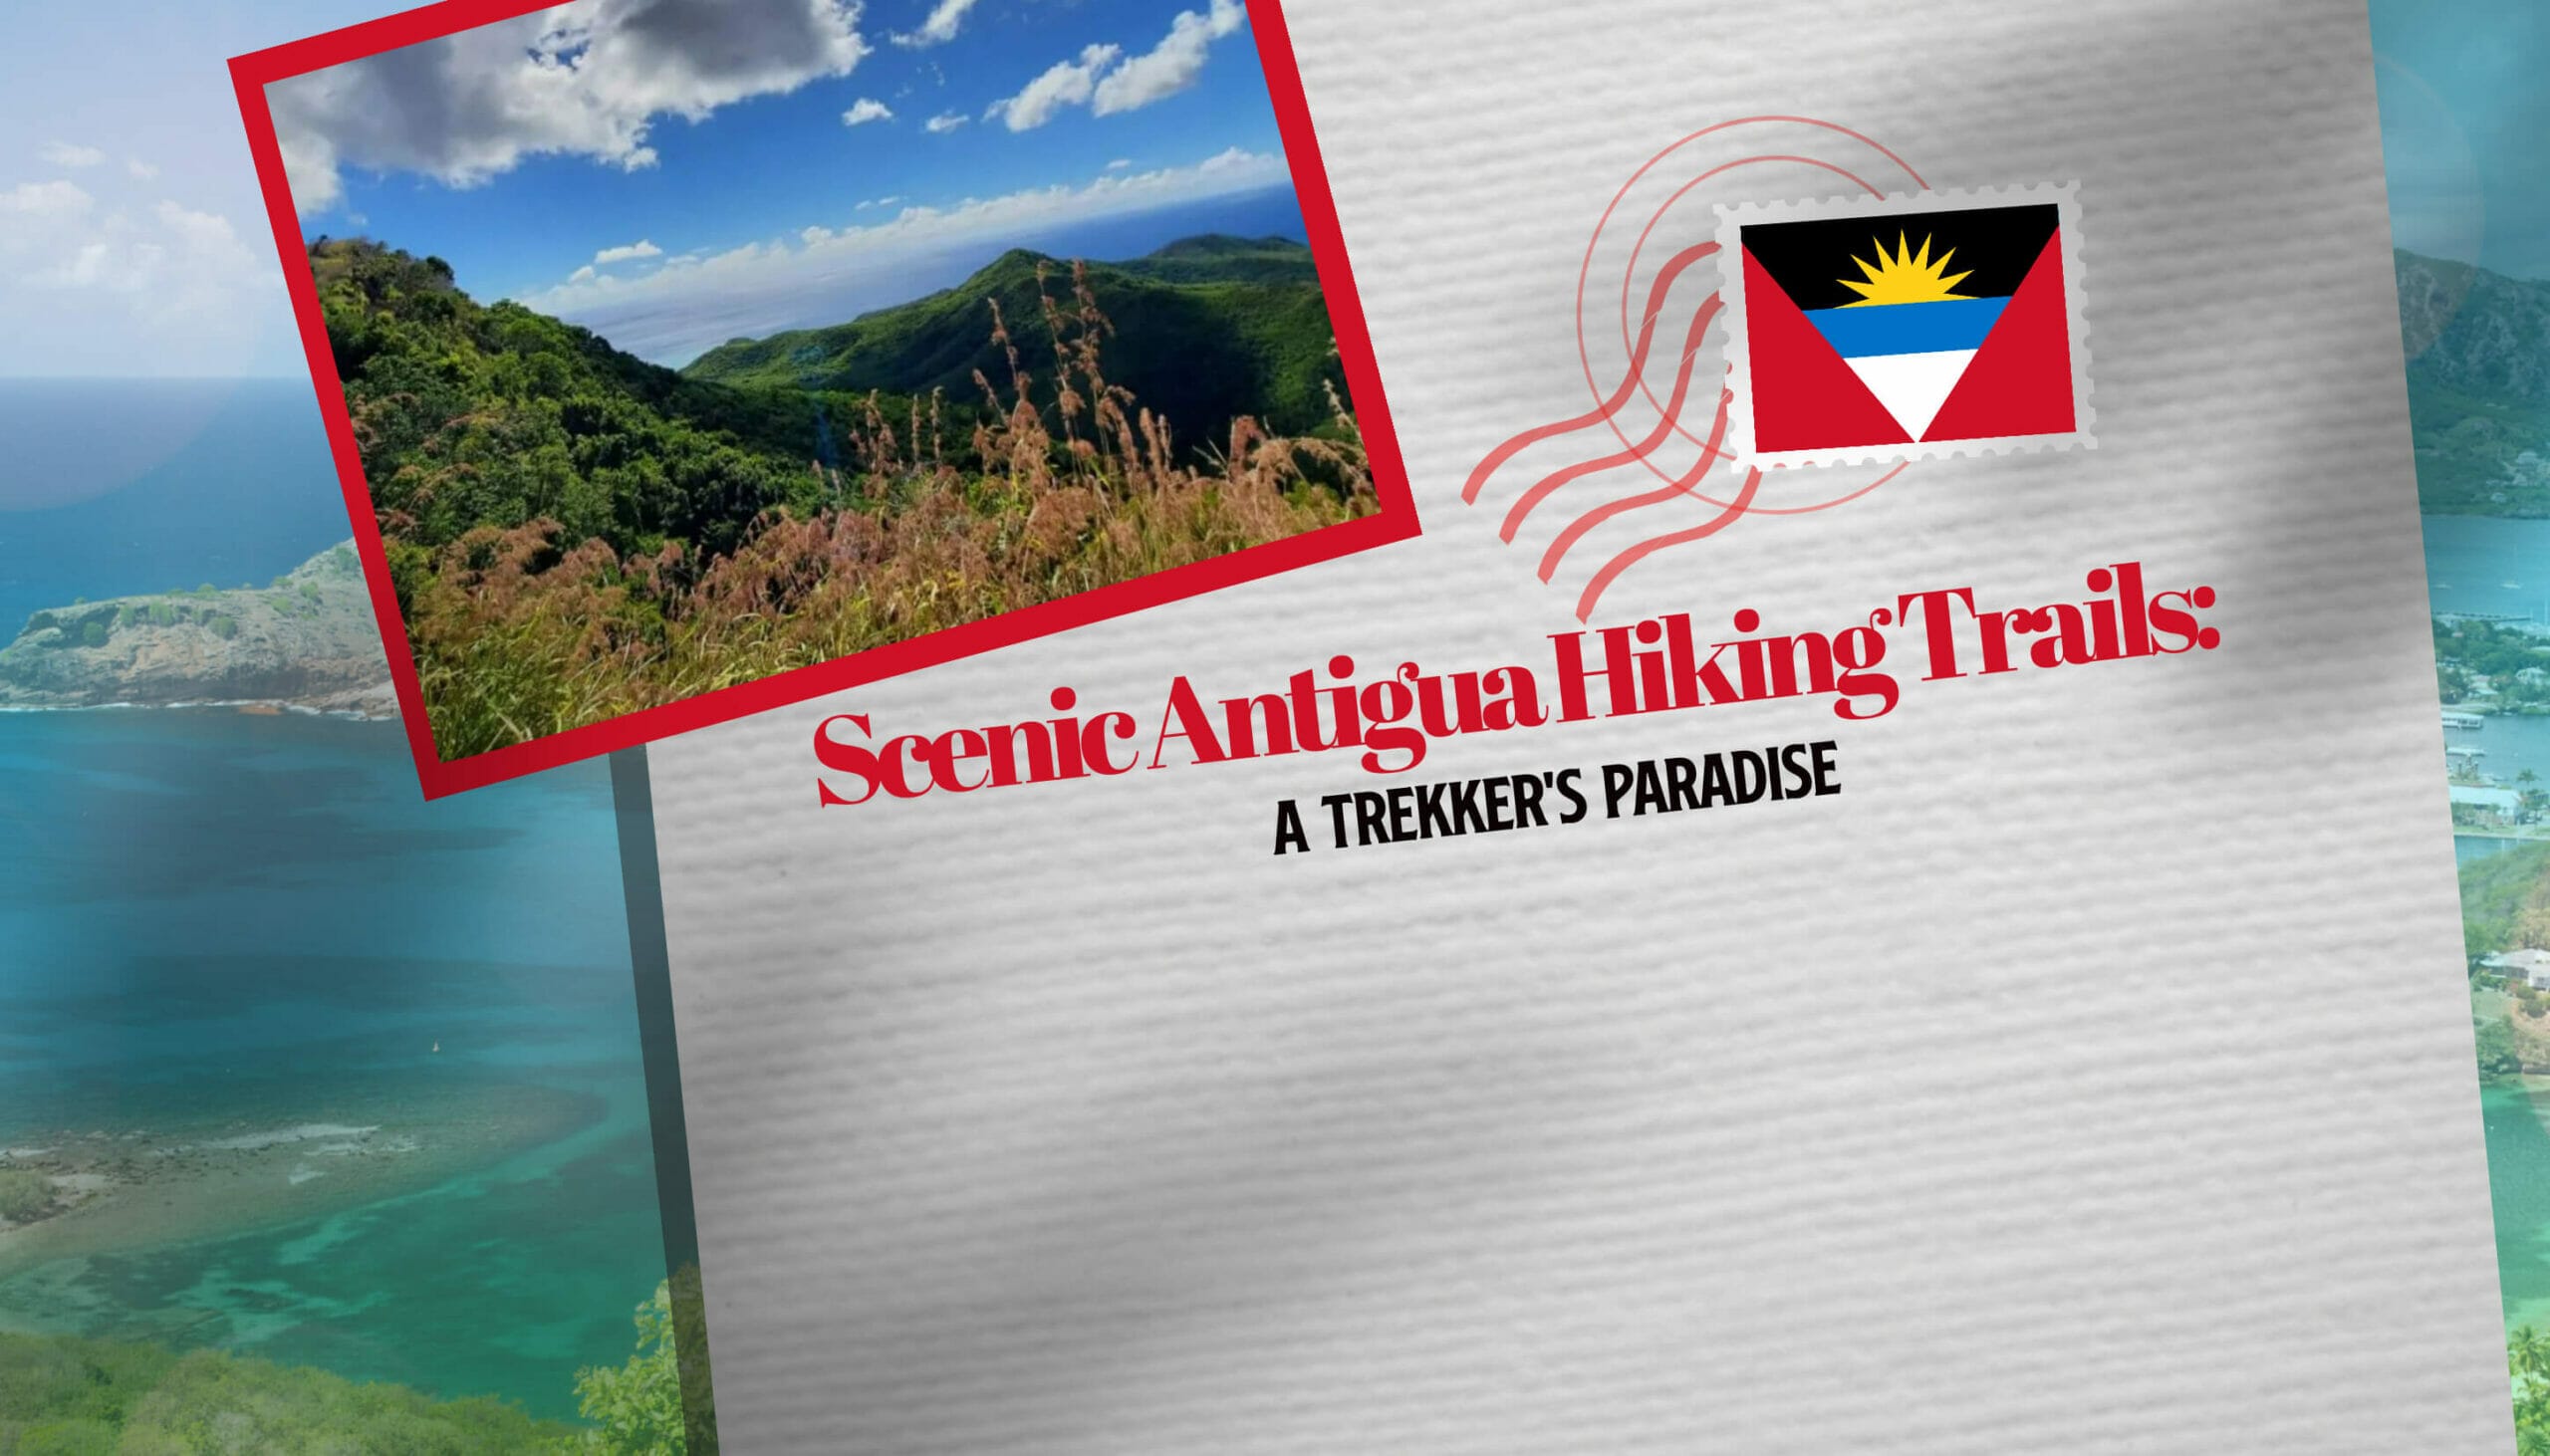 Scenic Antigua Hiking Trails A Trekker's Paradise